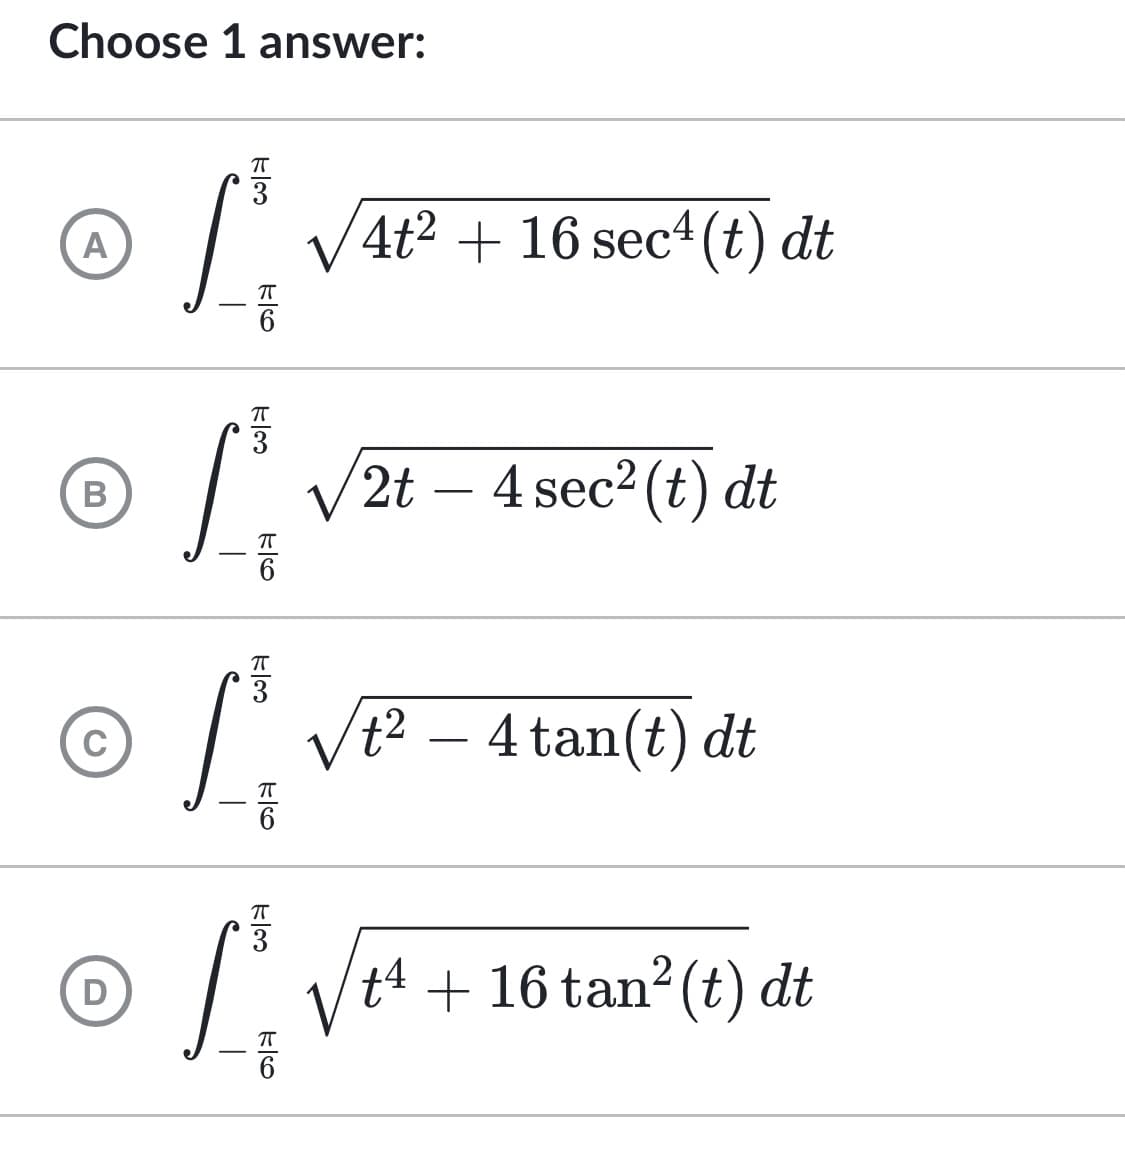 Choose 1 answer:
ㅠ
A
ľ √4t² + 16 sec¹ (t) dt
B
2t - 4 sec² (t) dt
√t² – 4 tan(t) dt
D
T
COLE
E6
ㅠ
cola
F
I'v
L₁ VE
56
+4
+ 16 tan² (t) dt